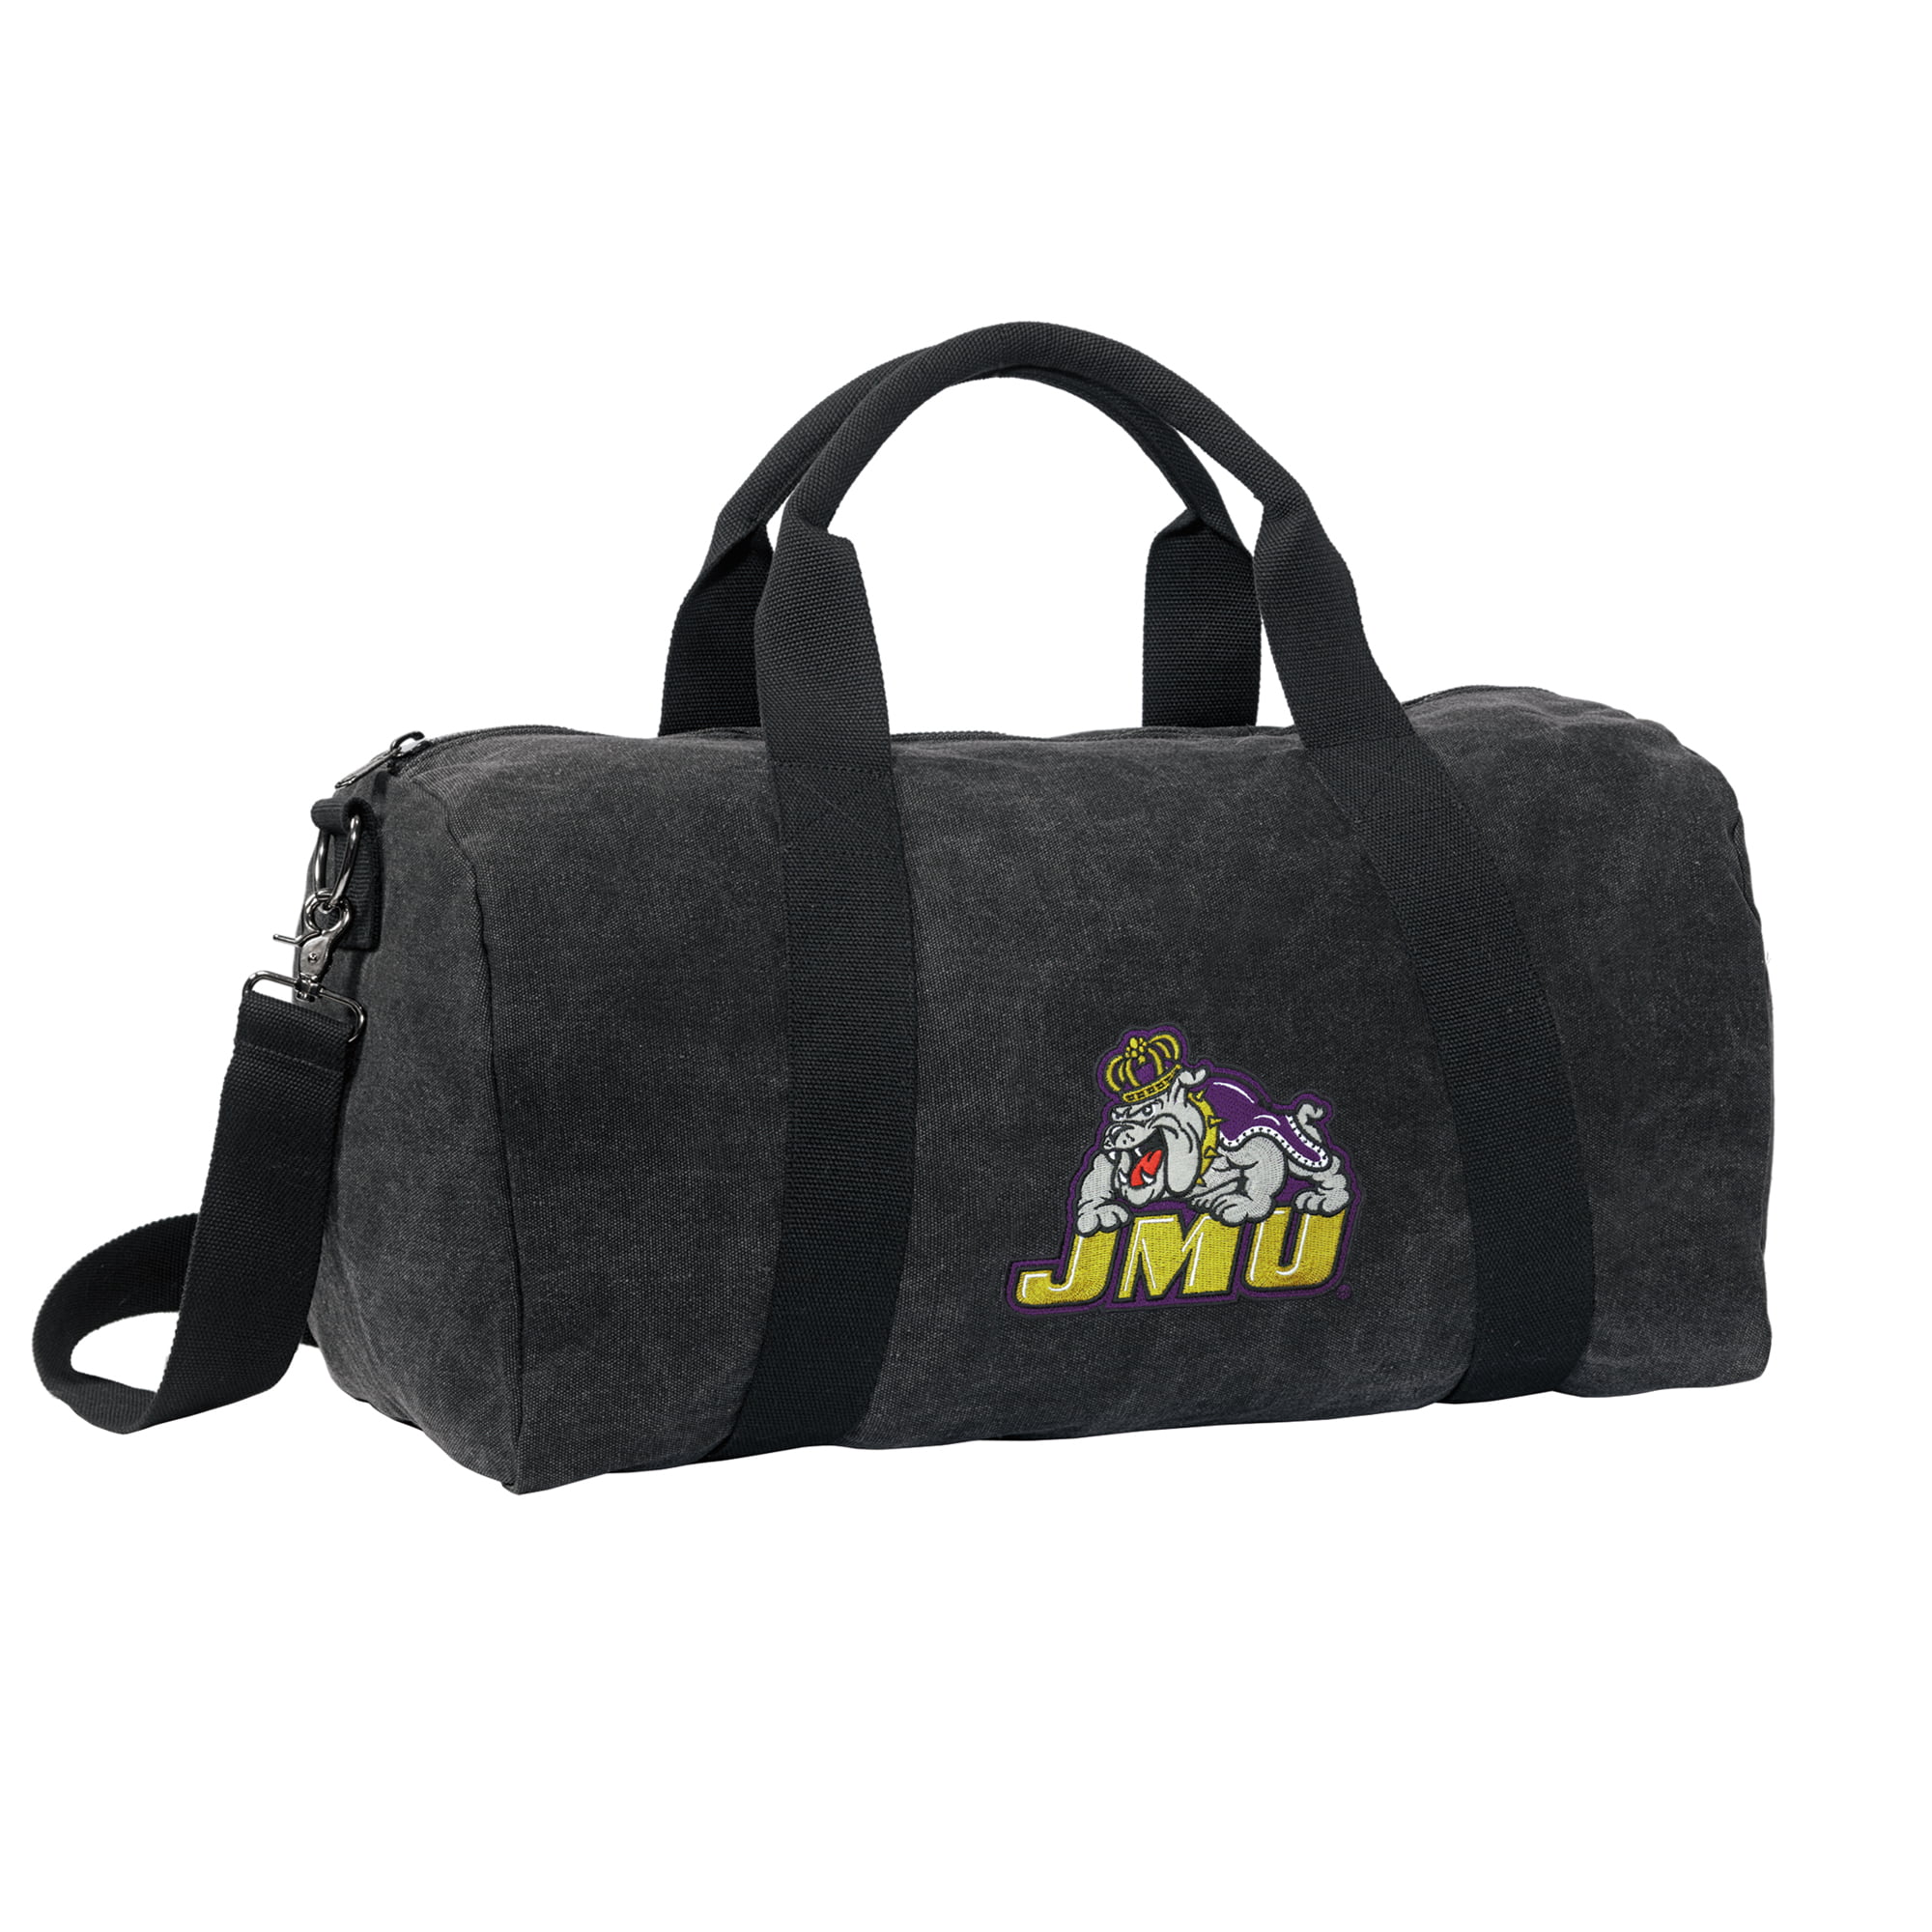 SMALL JMU Gym Bag Small James Madison University Duffel GRADUATION GIFT